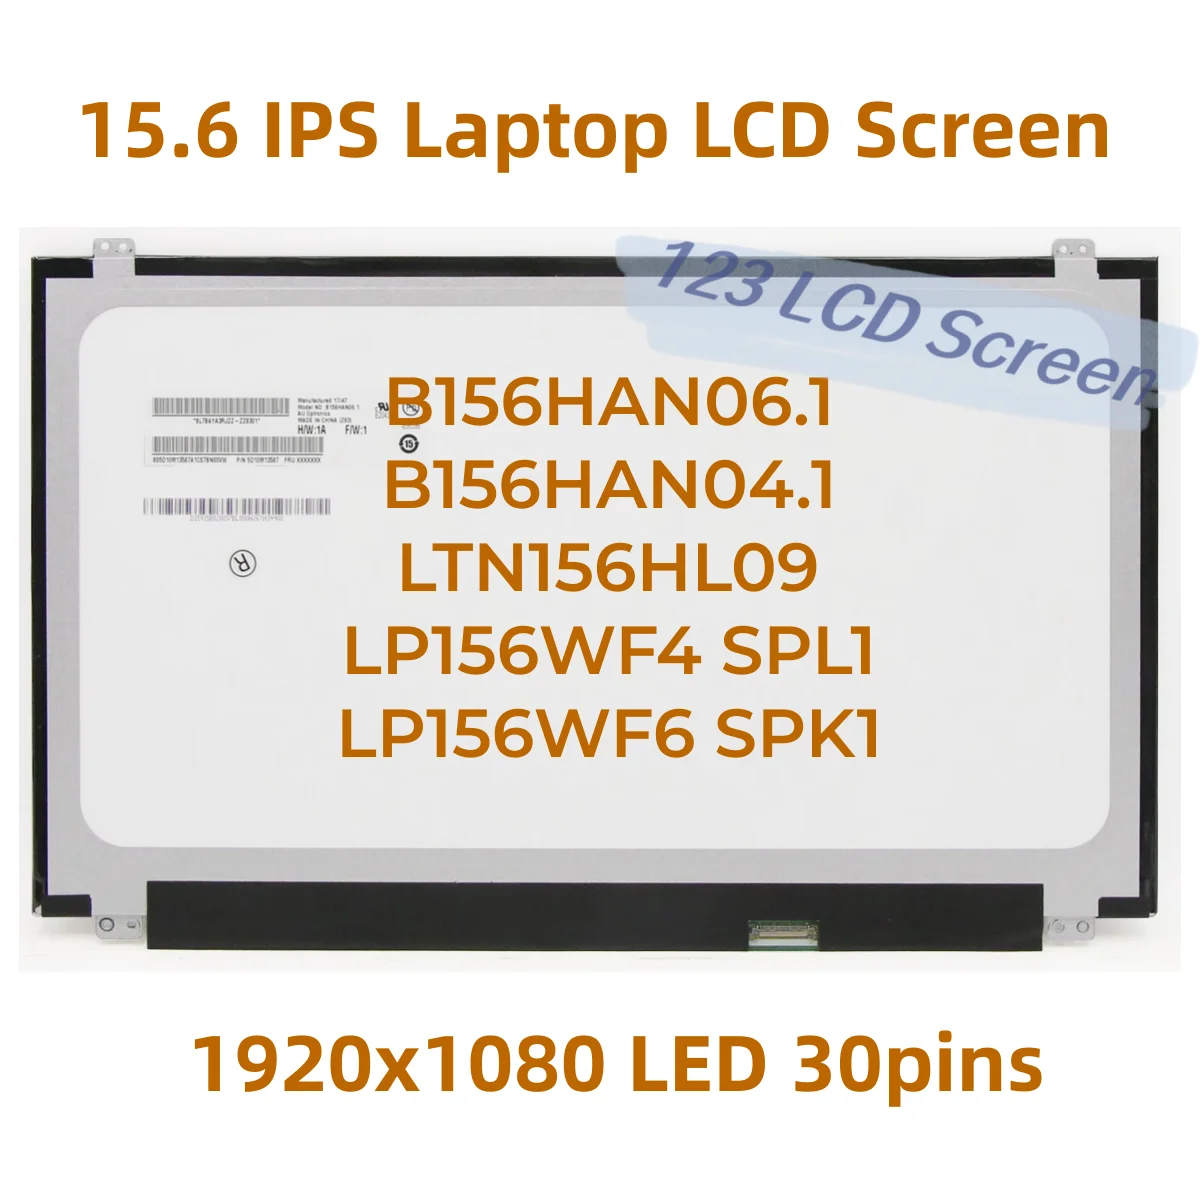 

15.6 IPS Laptop LCD Screen B156HAN06.1 Fit B156HAN04.1 LTN156HL09 LP156WF4 SPL1 LP156WF6 SPK1 FHD 1920x1080 LED 30pins eDP